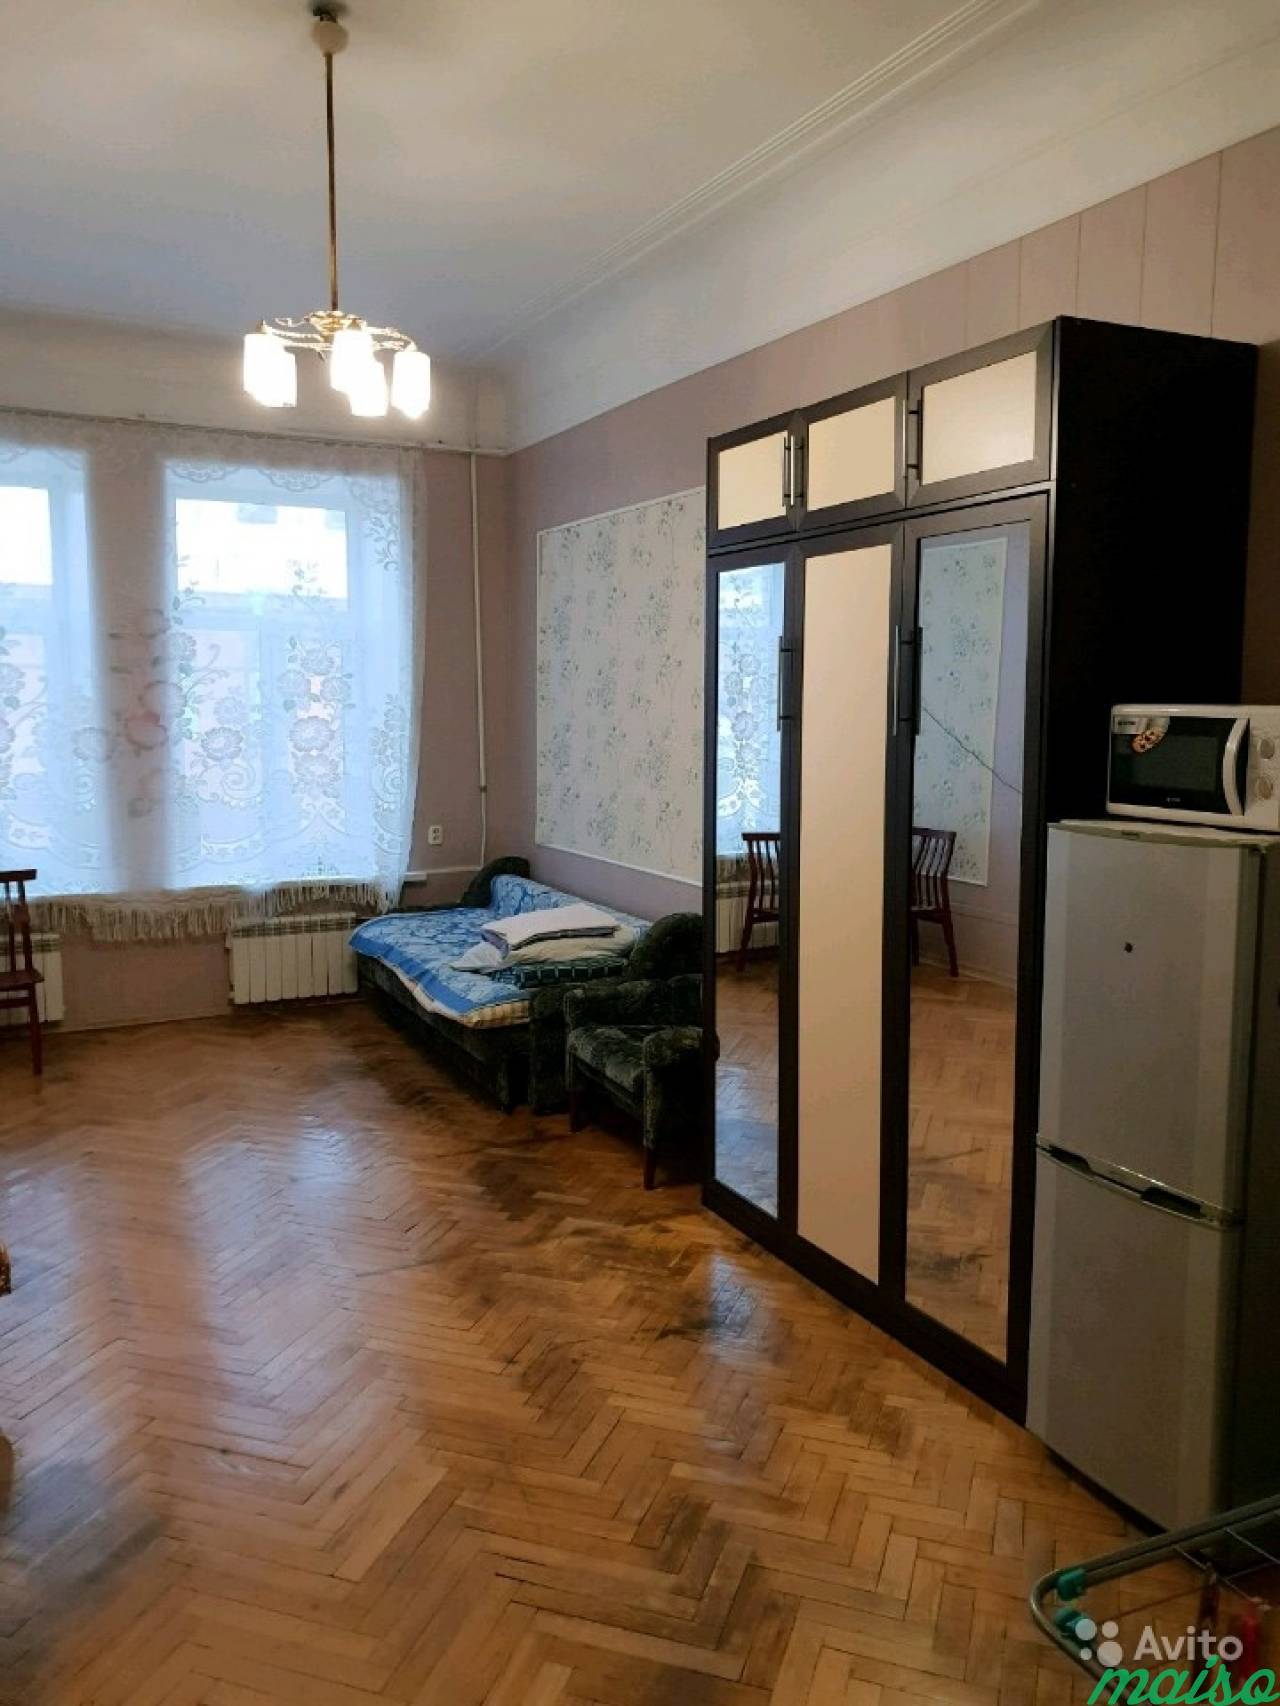 Комната 26 м² в 4-к, 4/6 эт. в Санкт-Петербурге. Фото 4